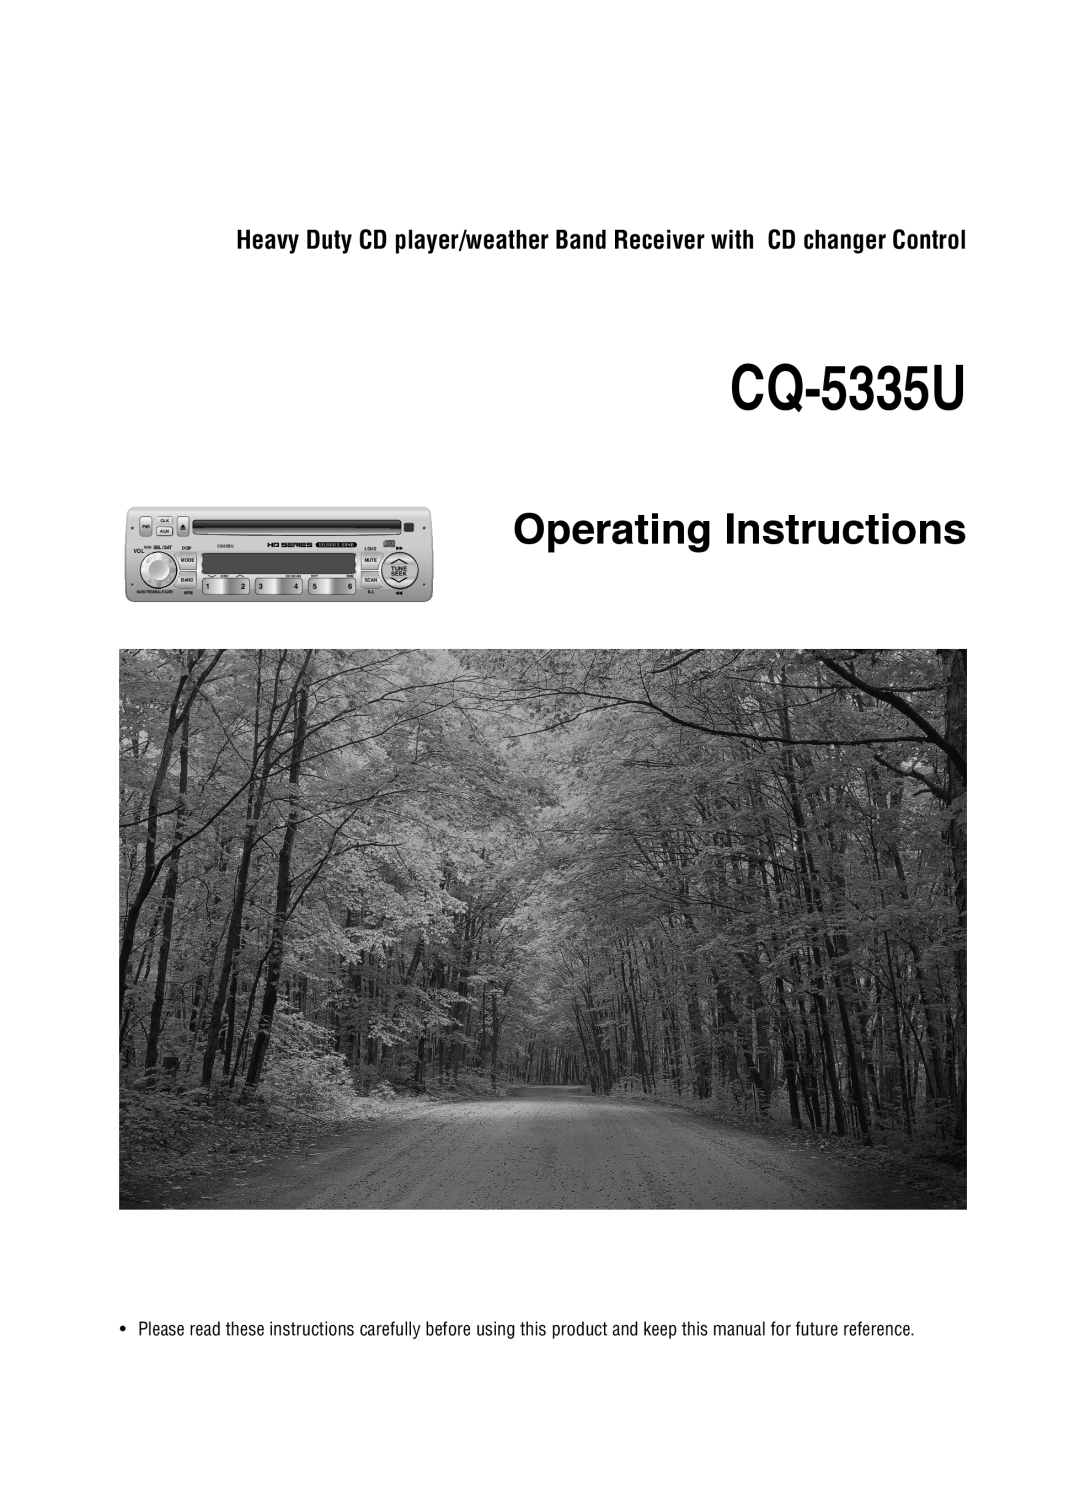 Panasonic CQ-5335U operating instructions Operating Instructions, Push Sel/Sat, Tune, Seek, Scan, Disp, Loud, Mode, Mute 